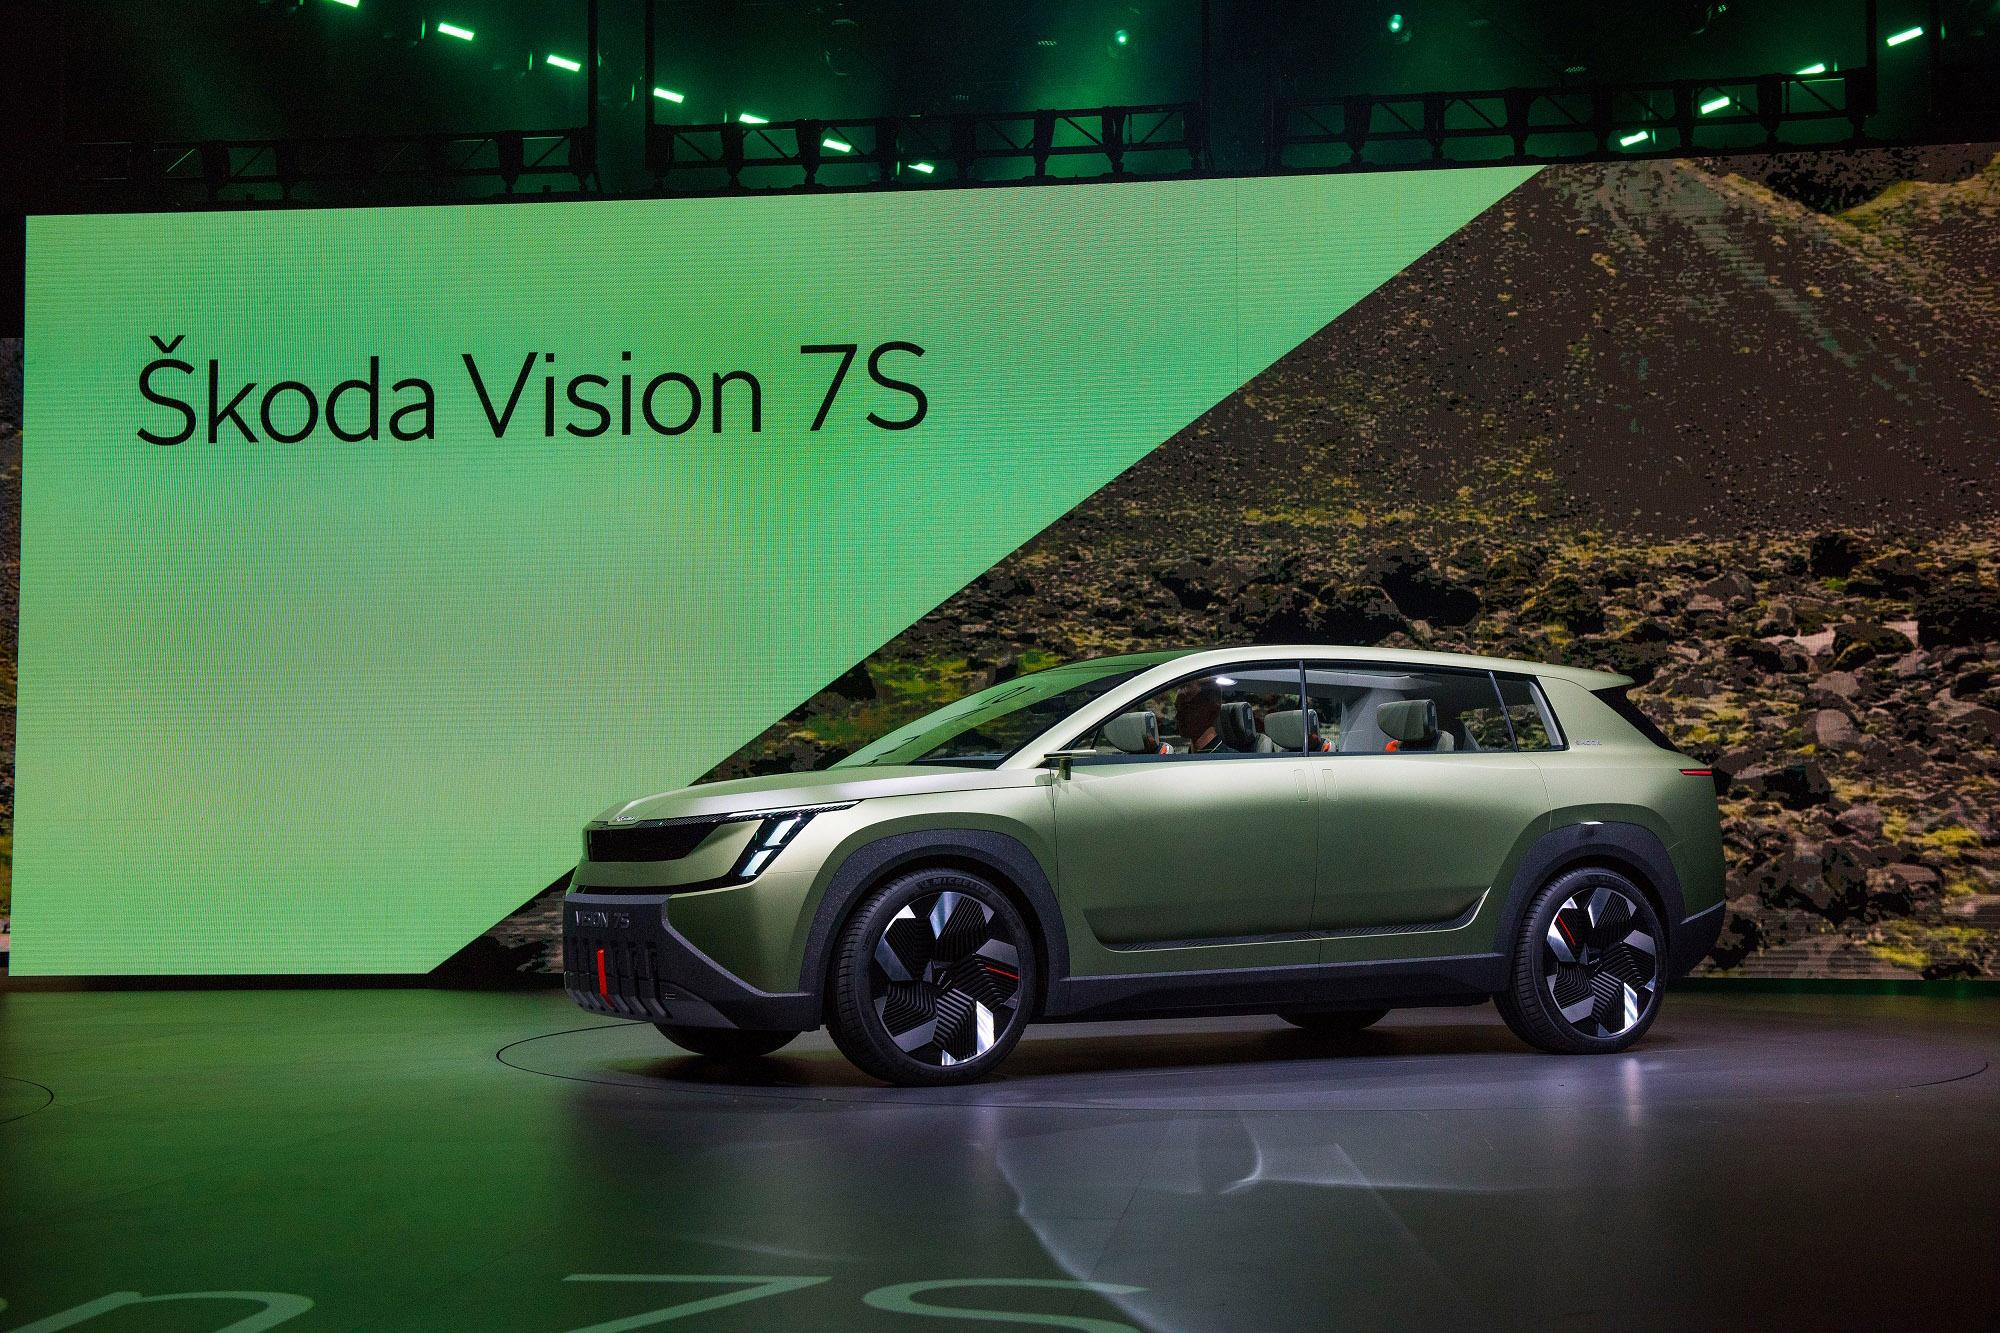 Skoda Vision 7s: Ένα Concept car στο Golden Hall